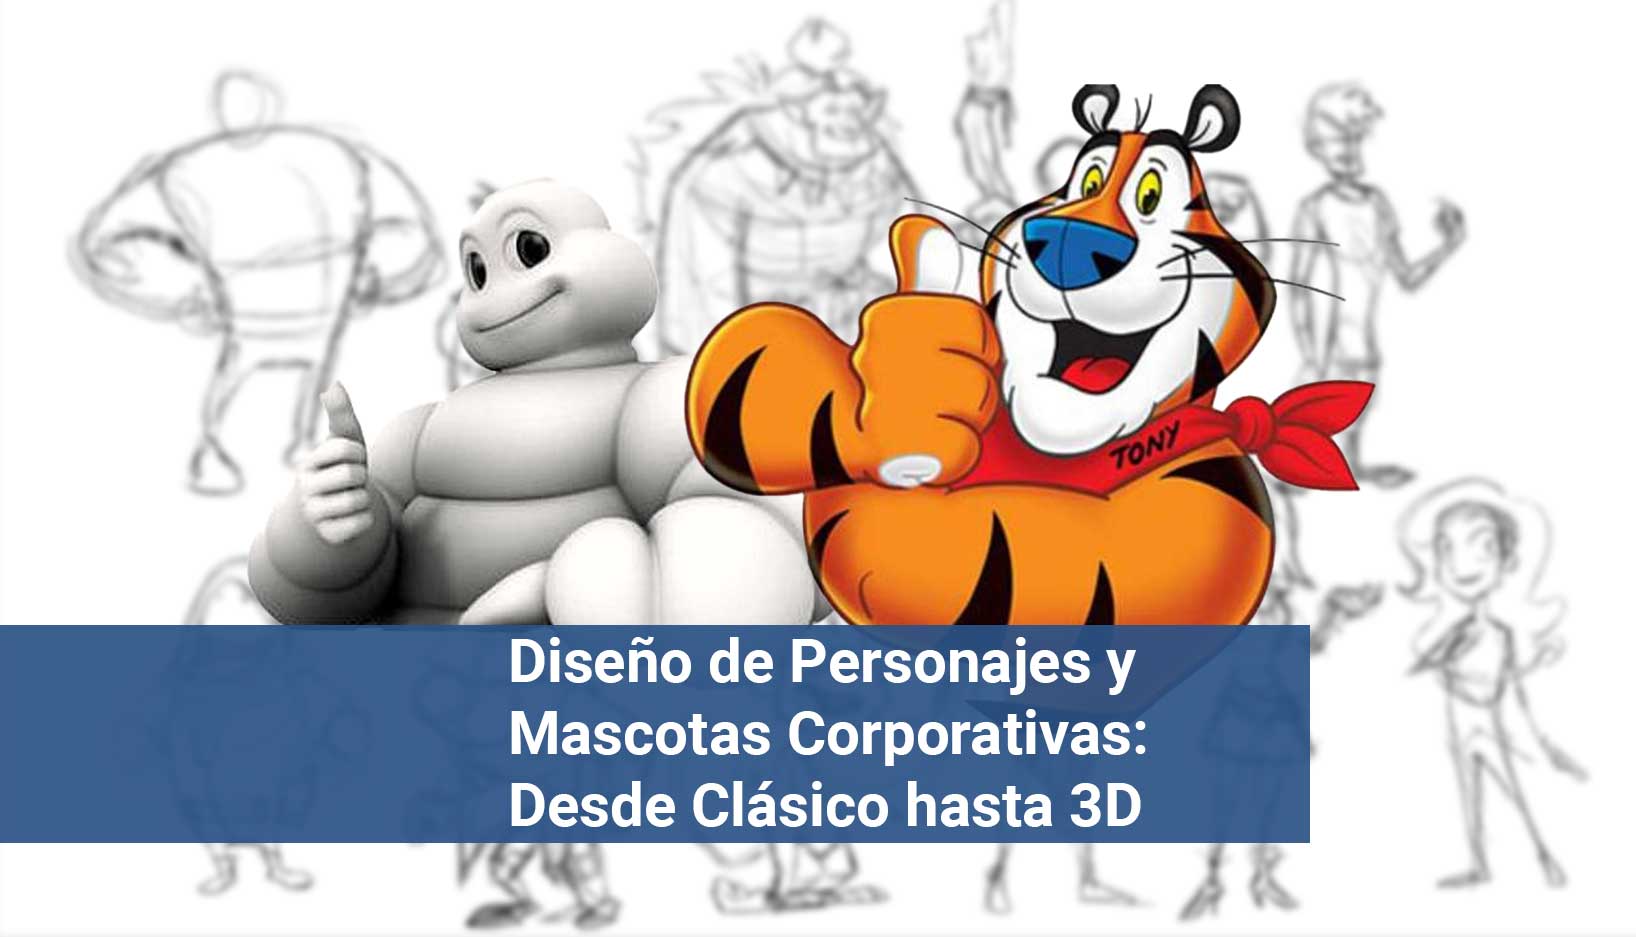 Diseño de personajes 3D para imagen corporativa